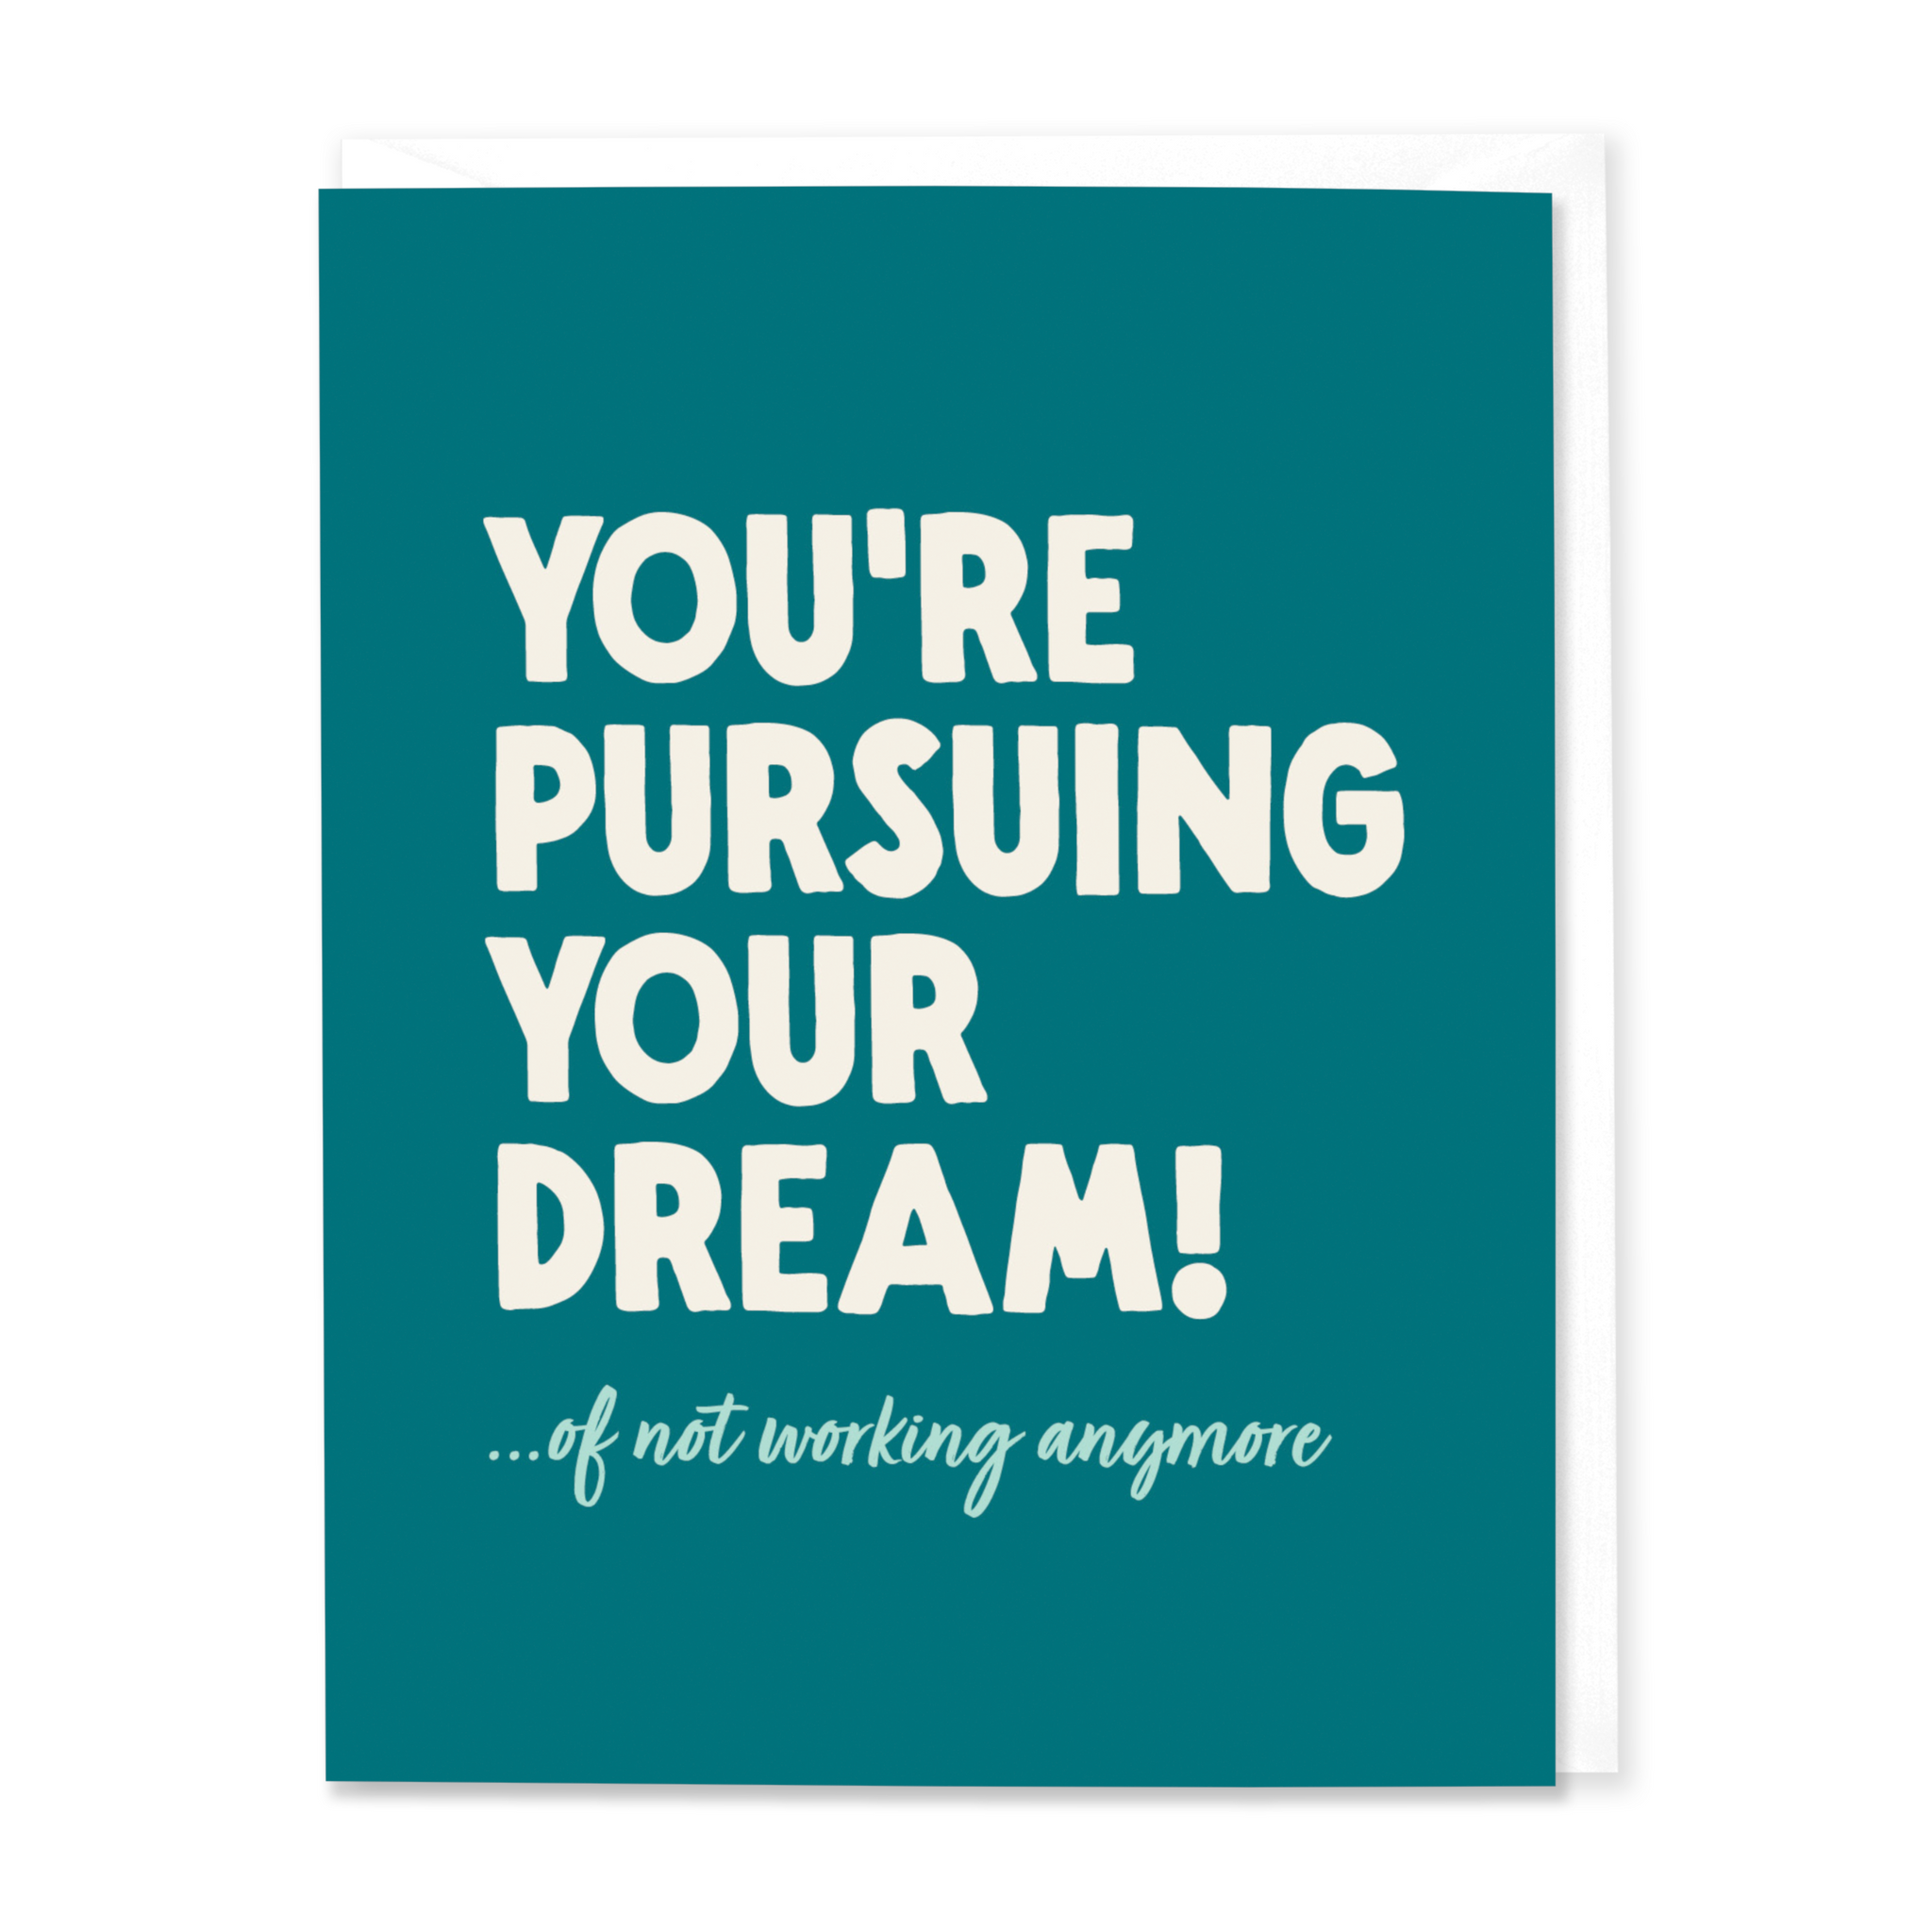 Pursuing Your Dream